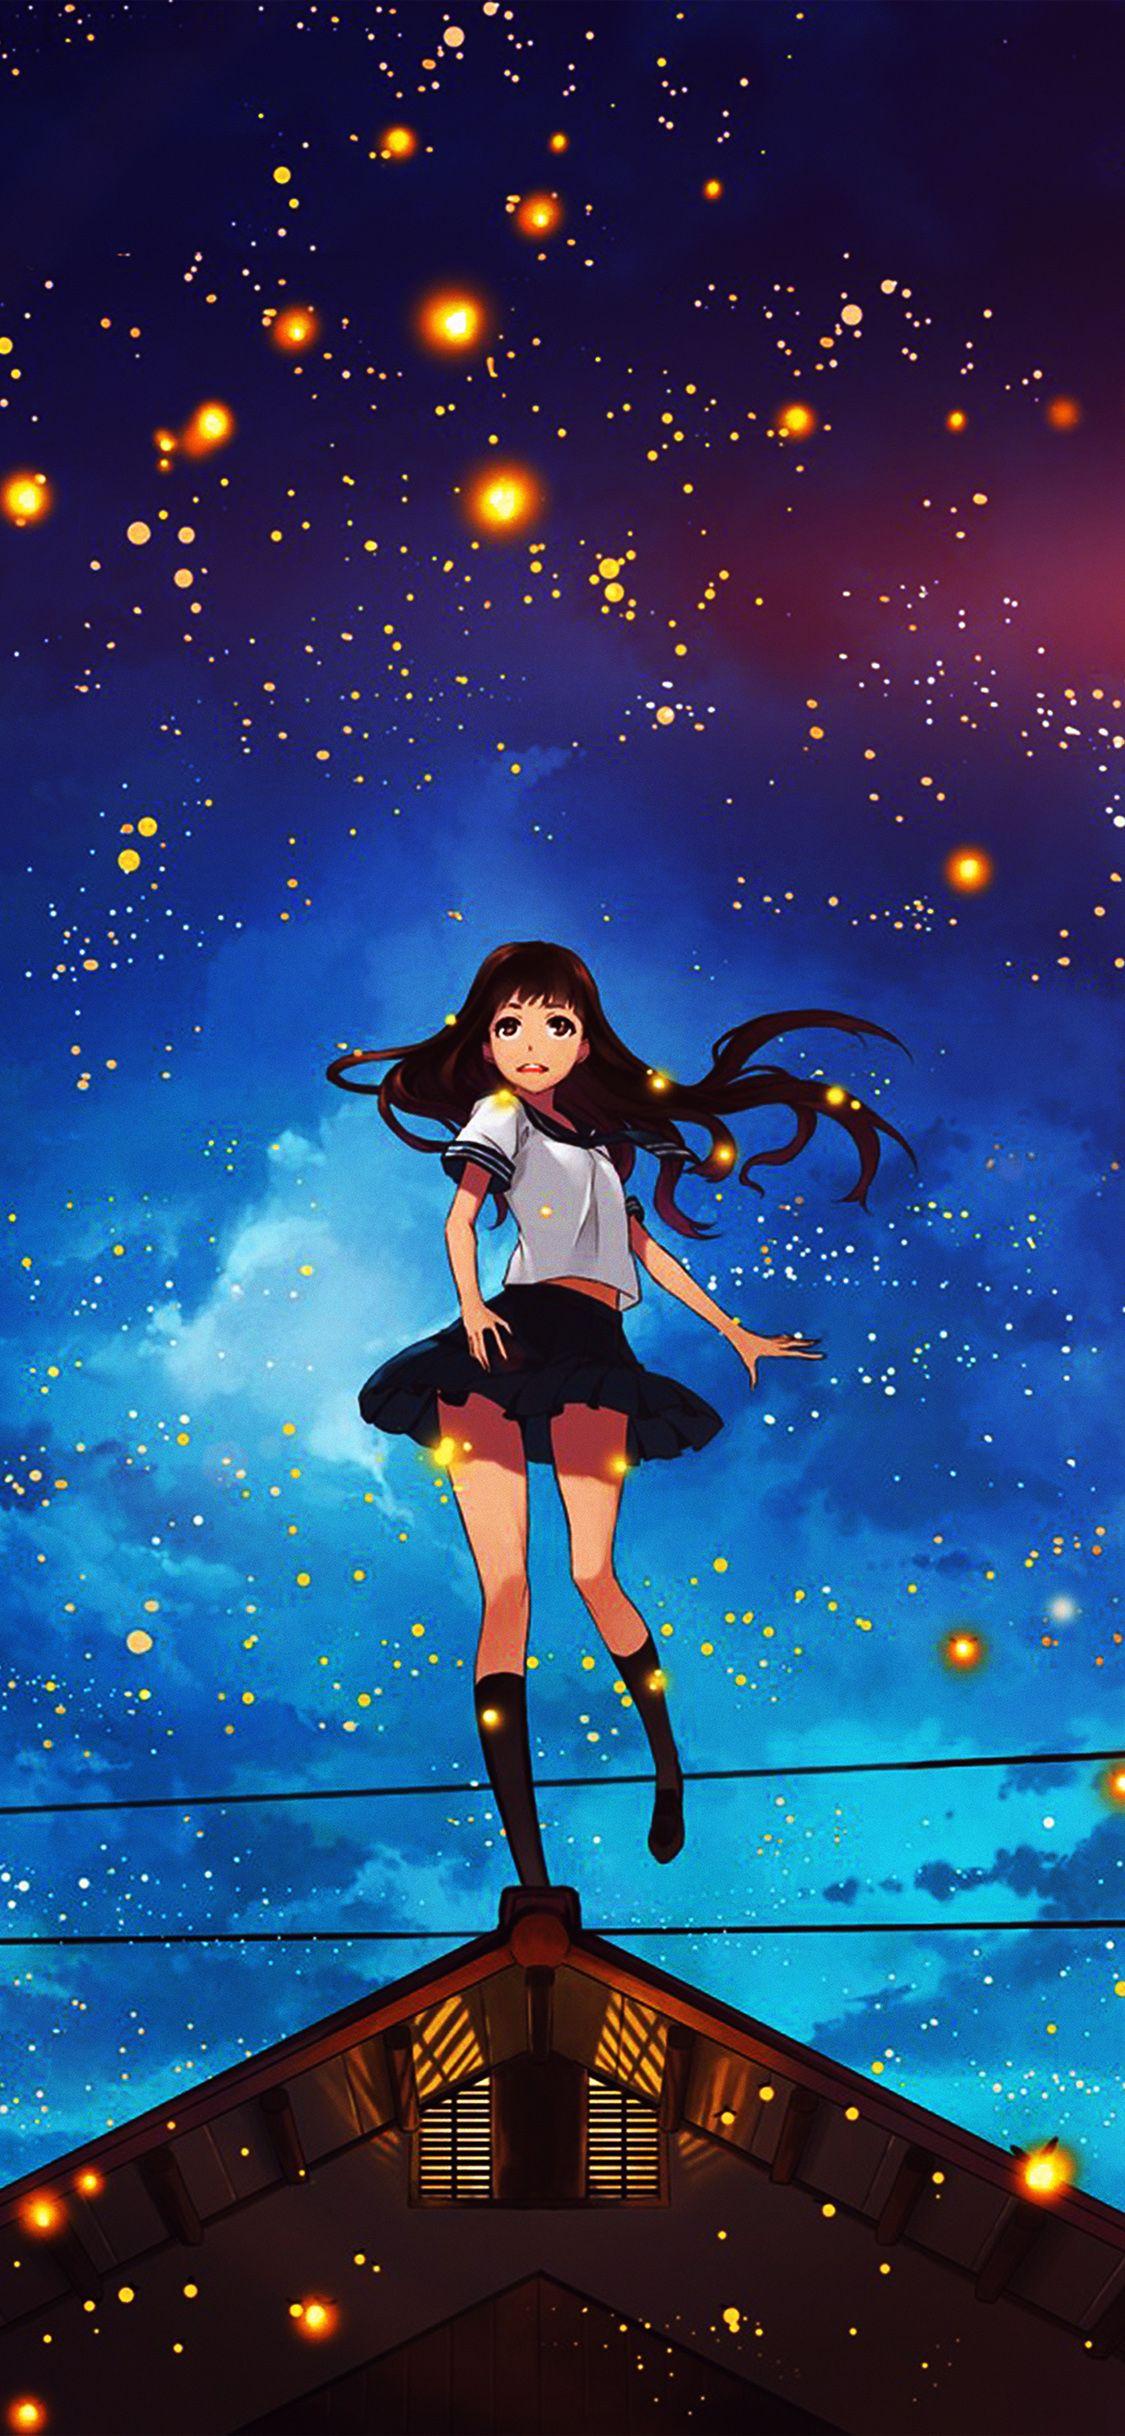 Anime Girl Wallpaper Iphone 11 Pro Max Anime Wallpaper HD